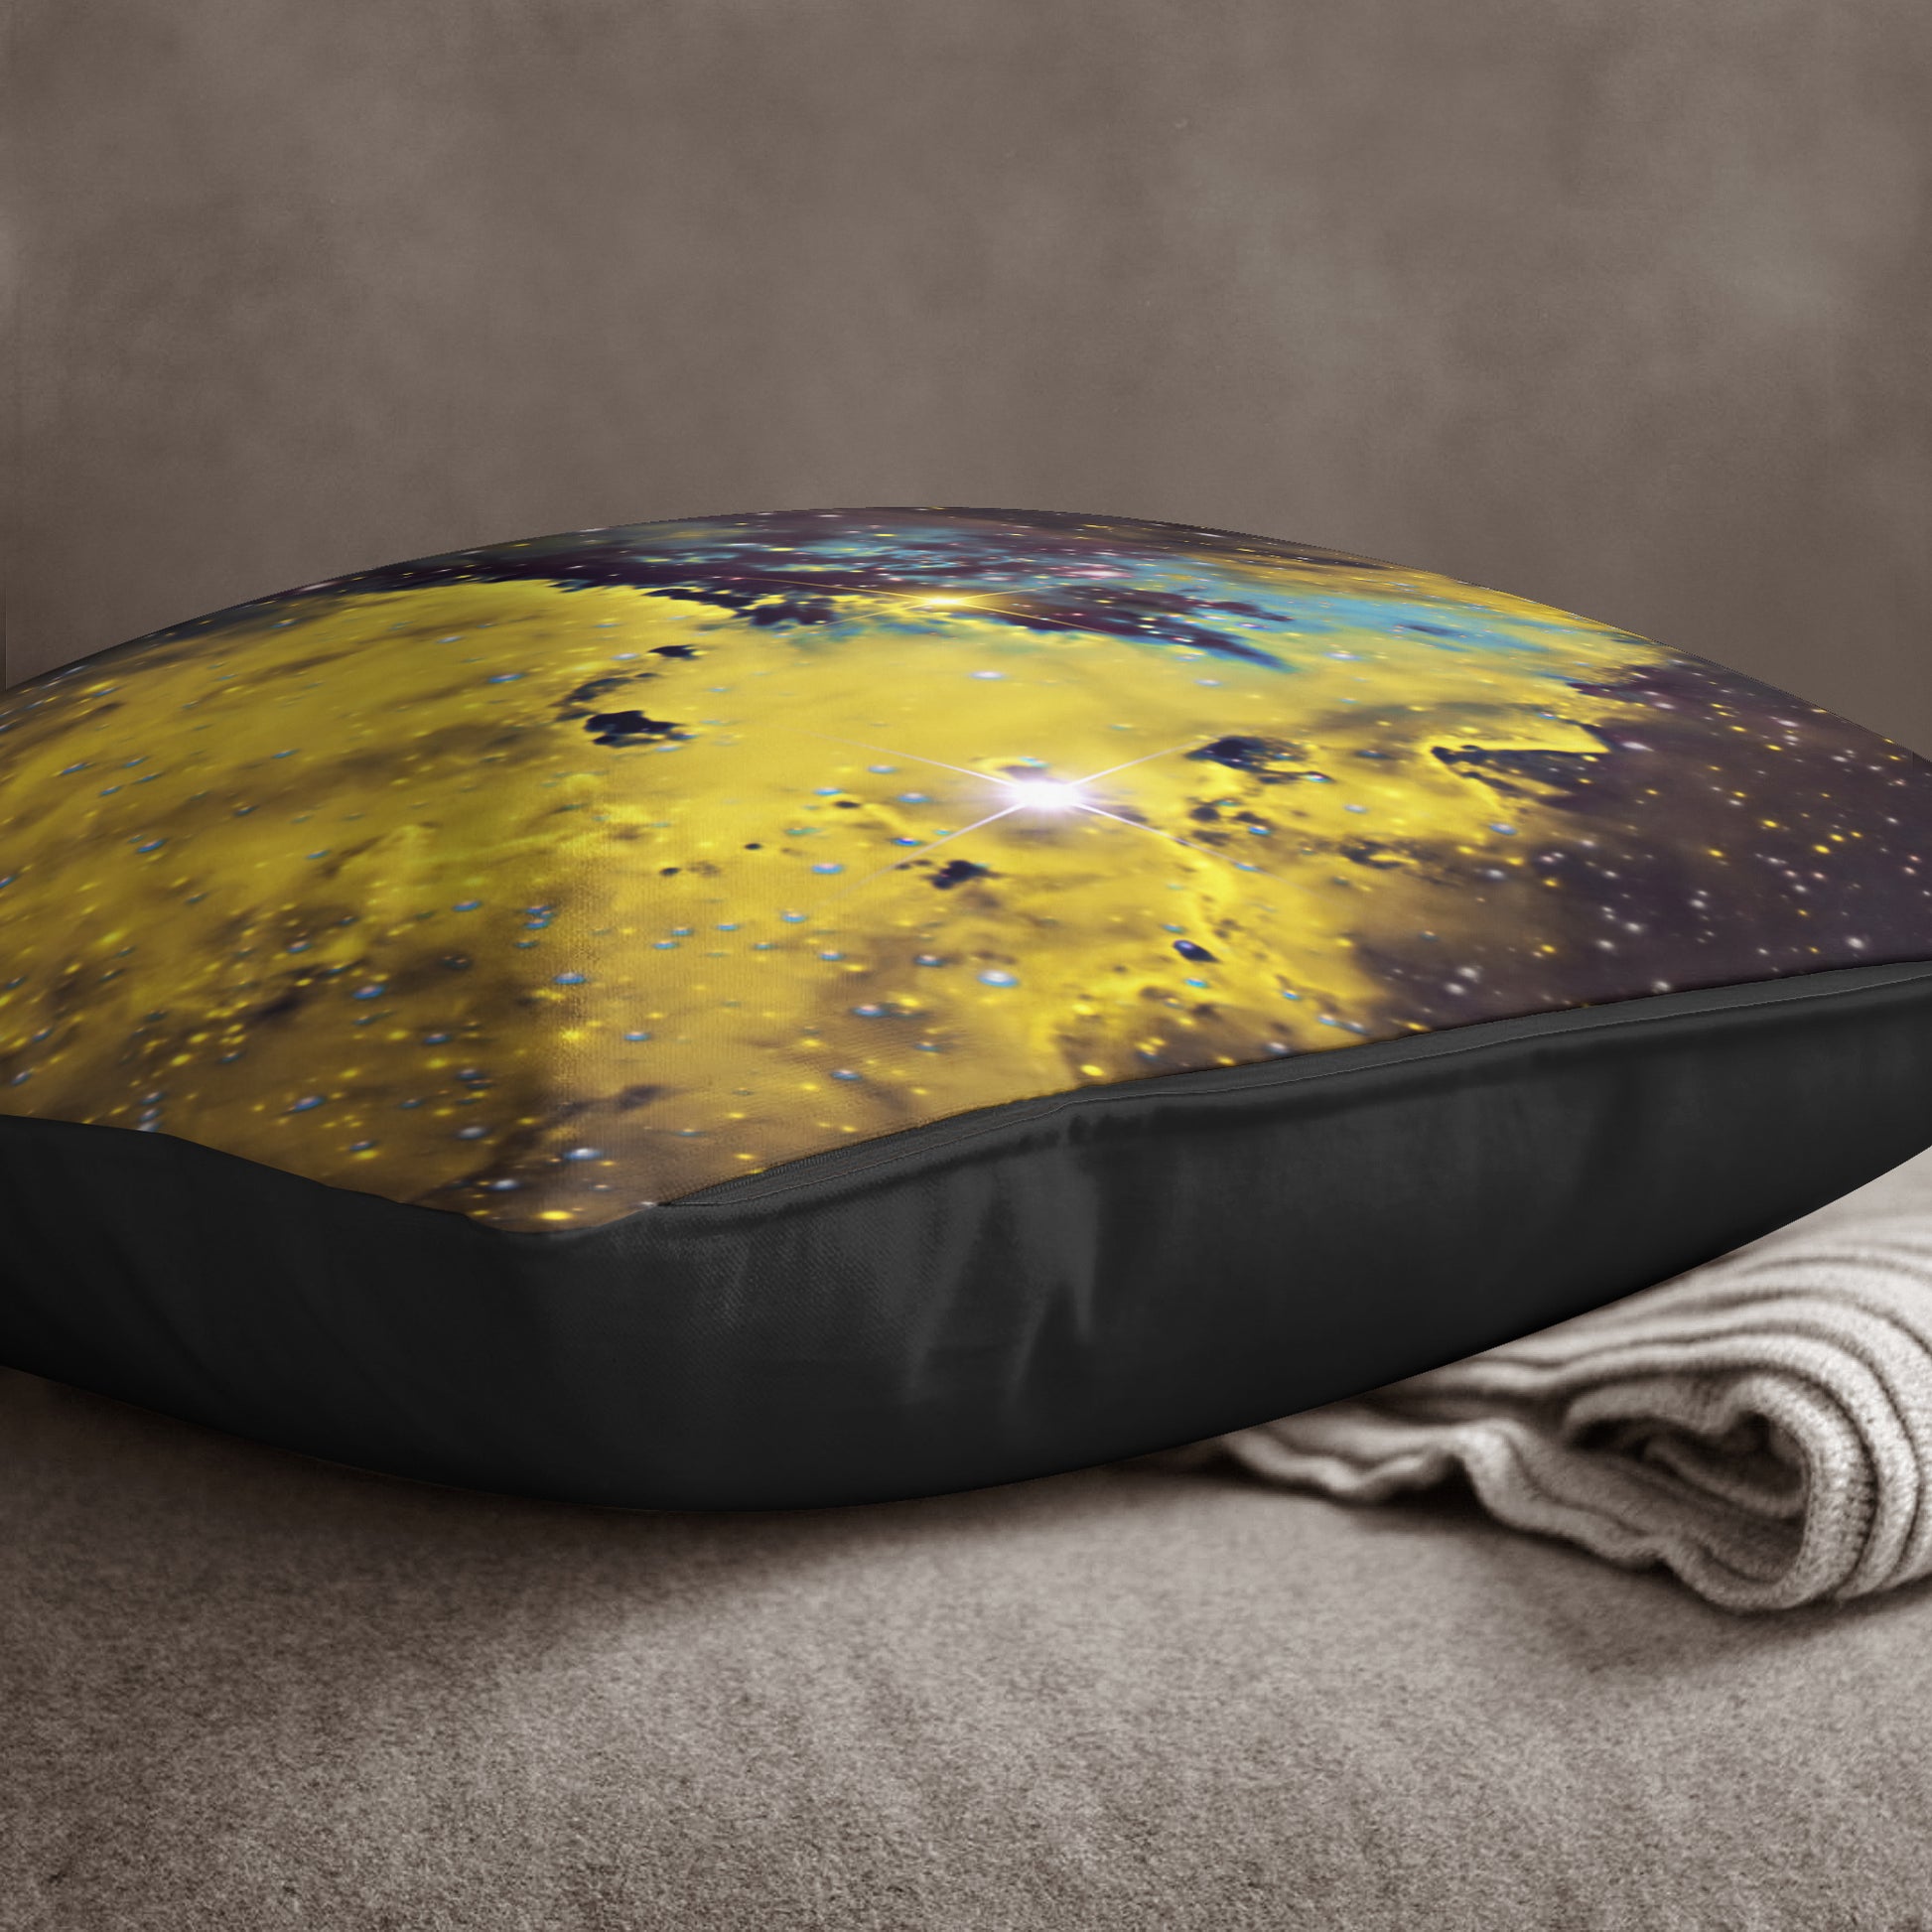 Space Cushion - Pacman Nebula - The Tiny Art Co